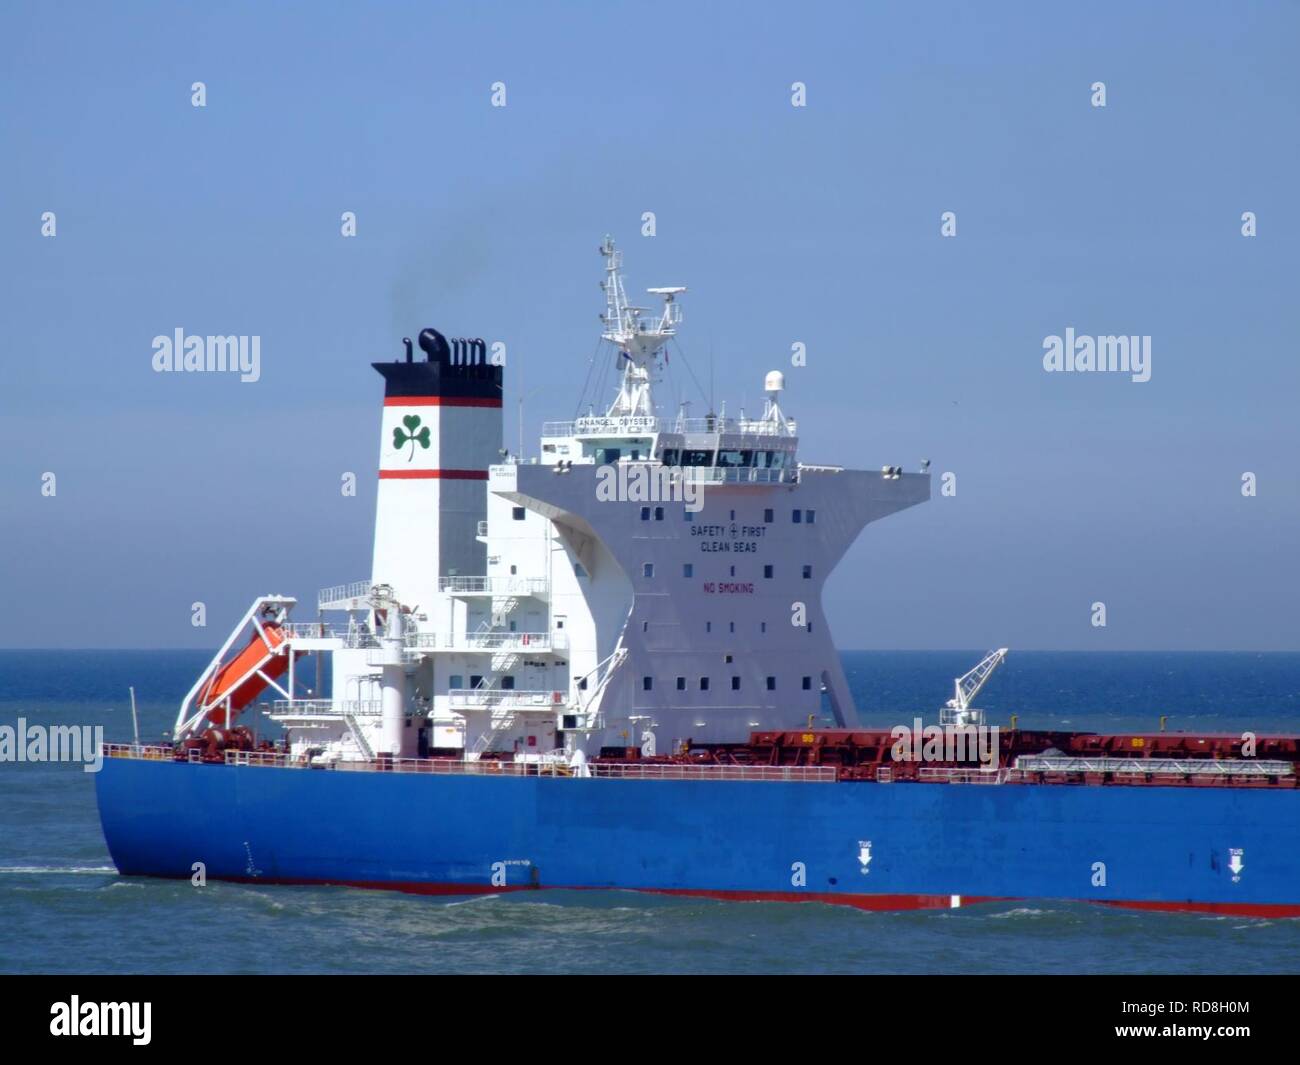 Anangel Odyssey photo4 approaching Port of Rotterdam, Holland 04-Aug-2007. Stock Photo